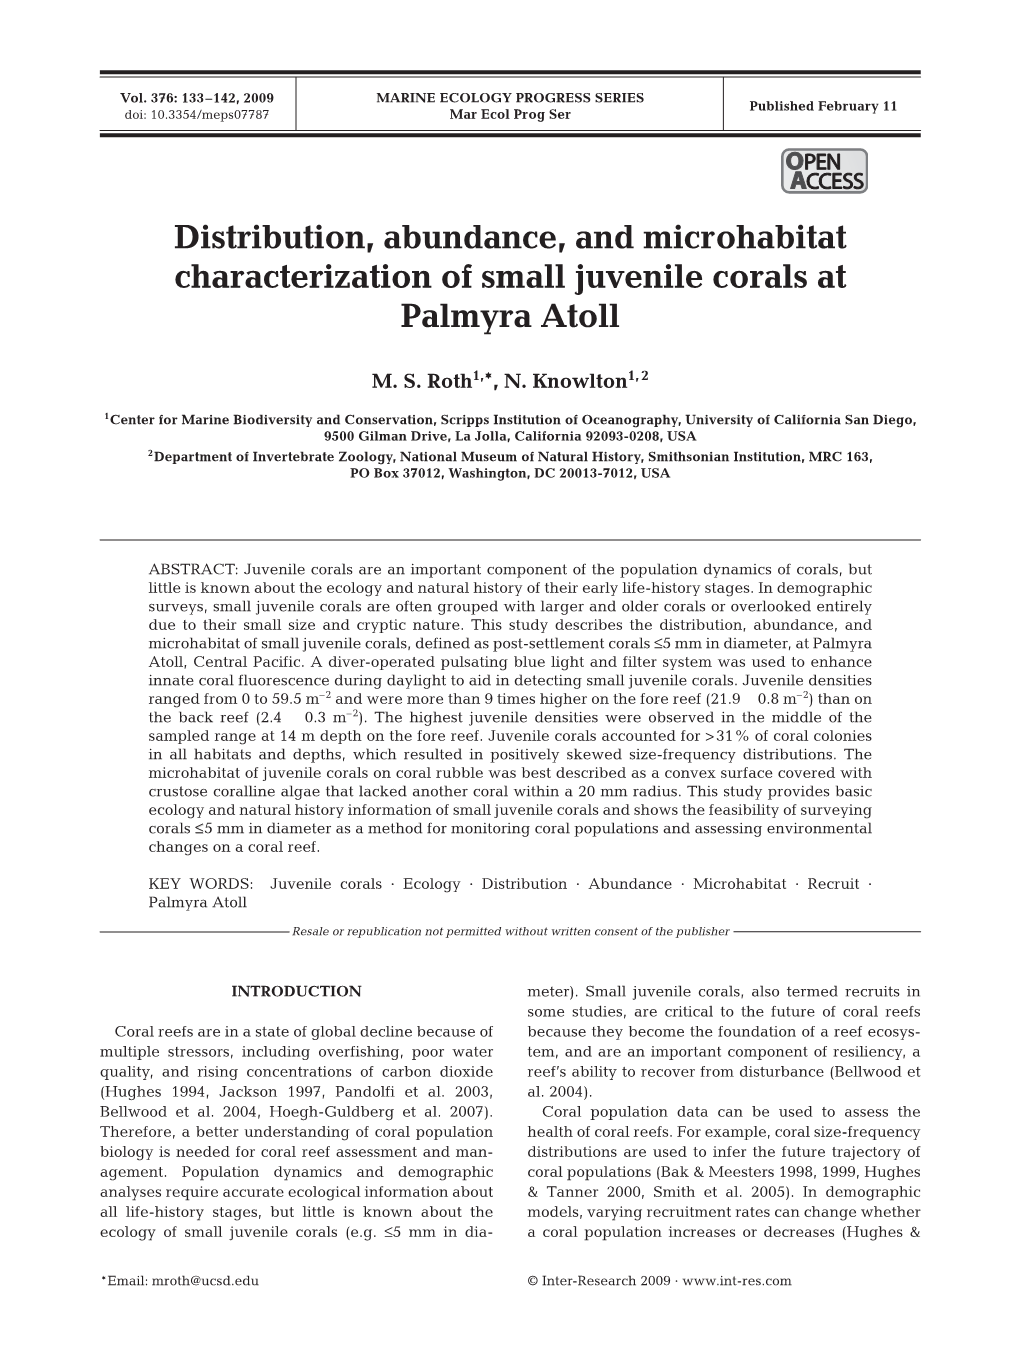 Distribution, Abundance, and Microhabitat Characterization of Small Juvenile Corals at Palmyra Atoll